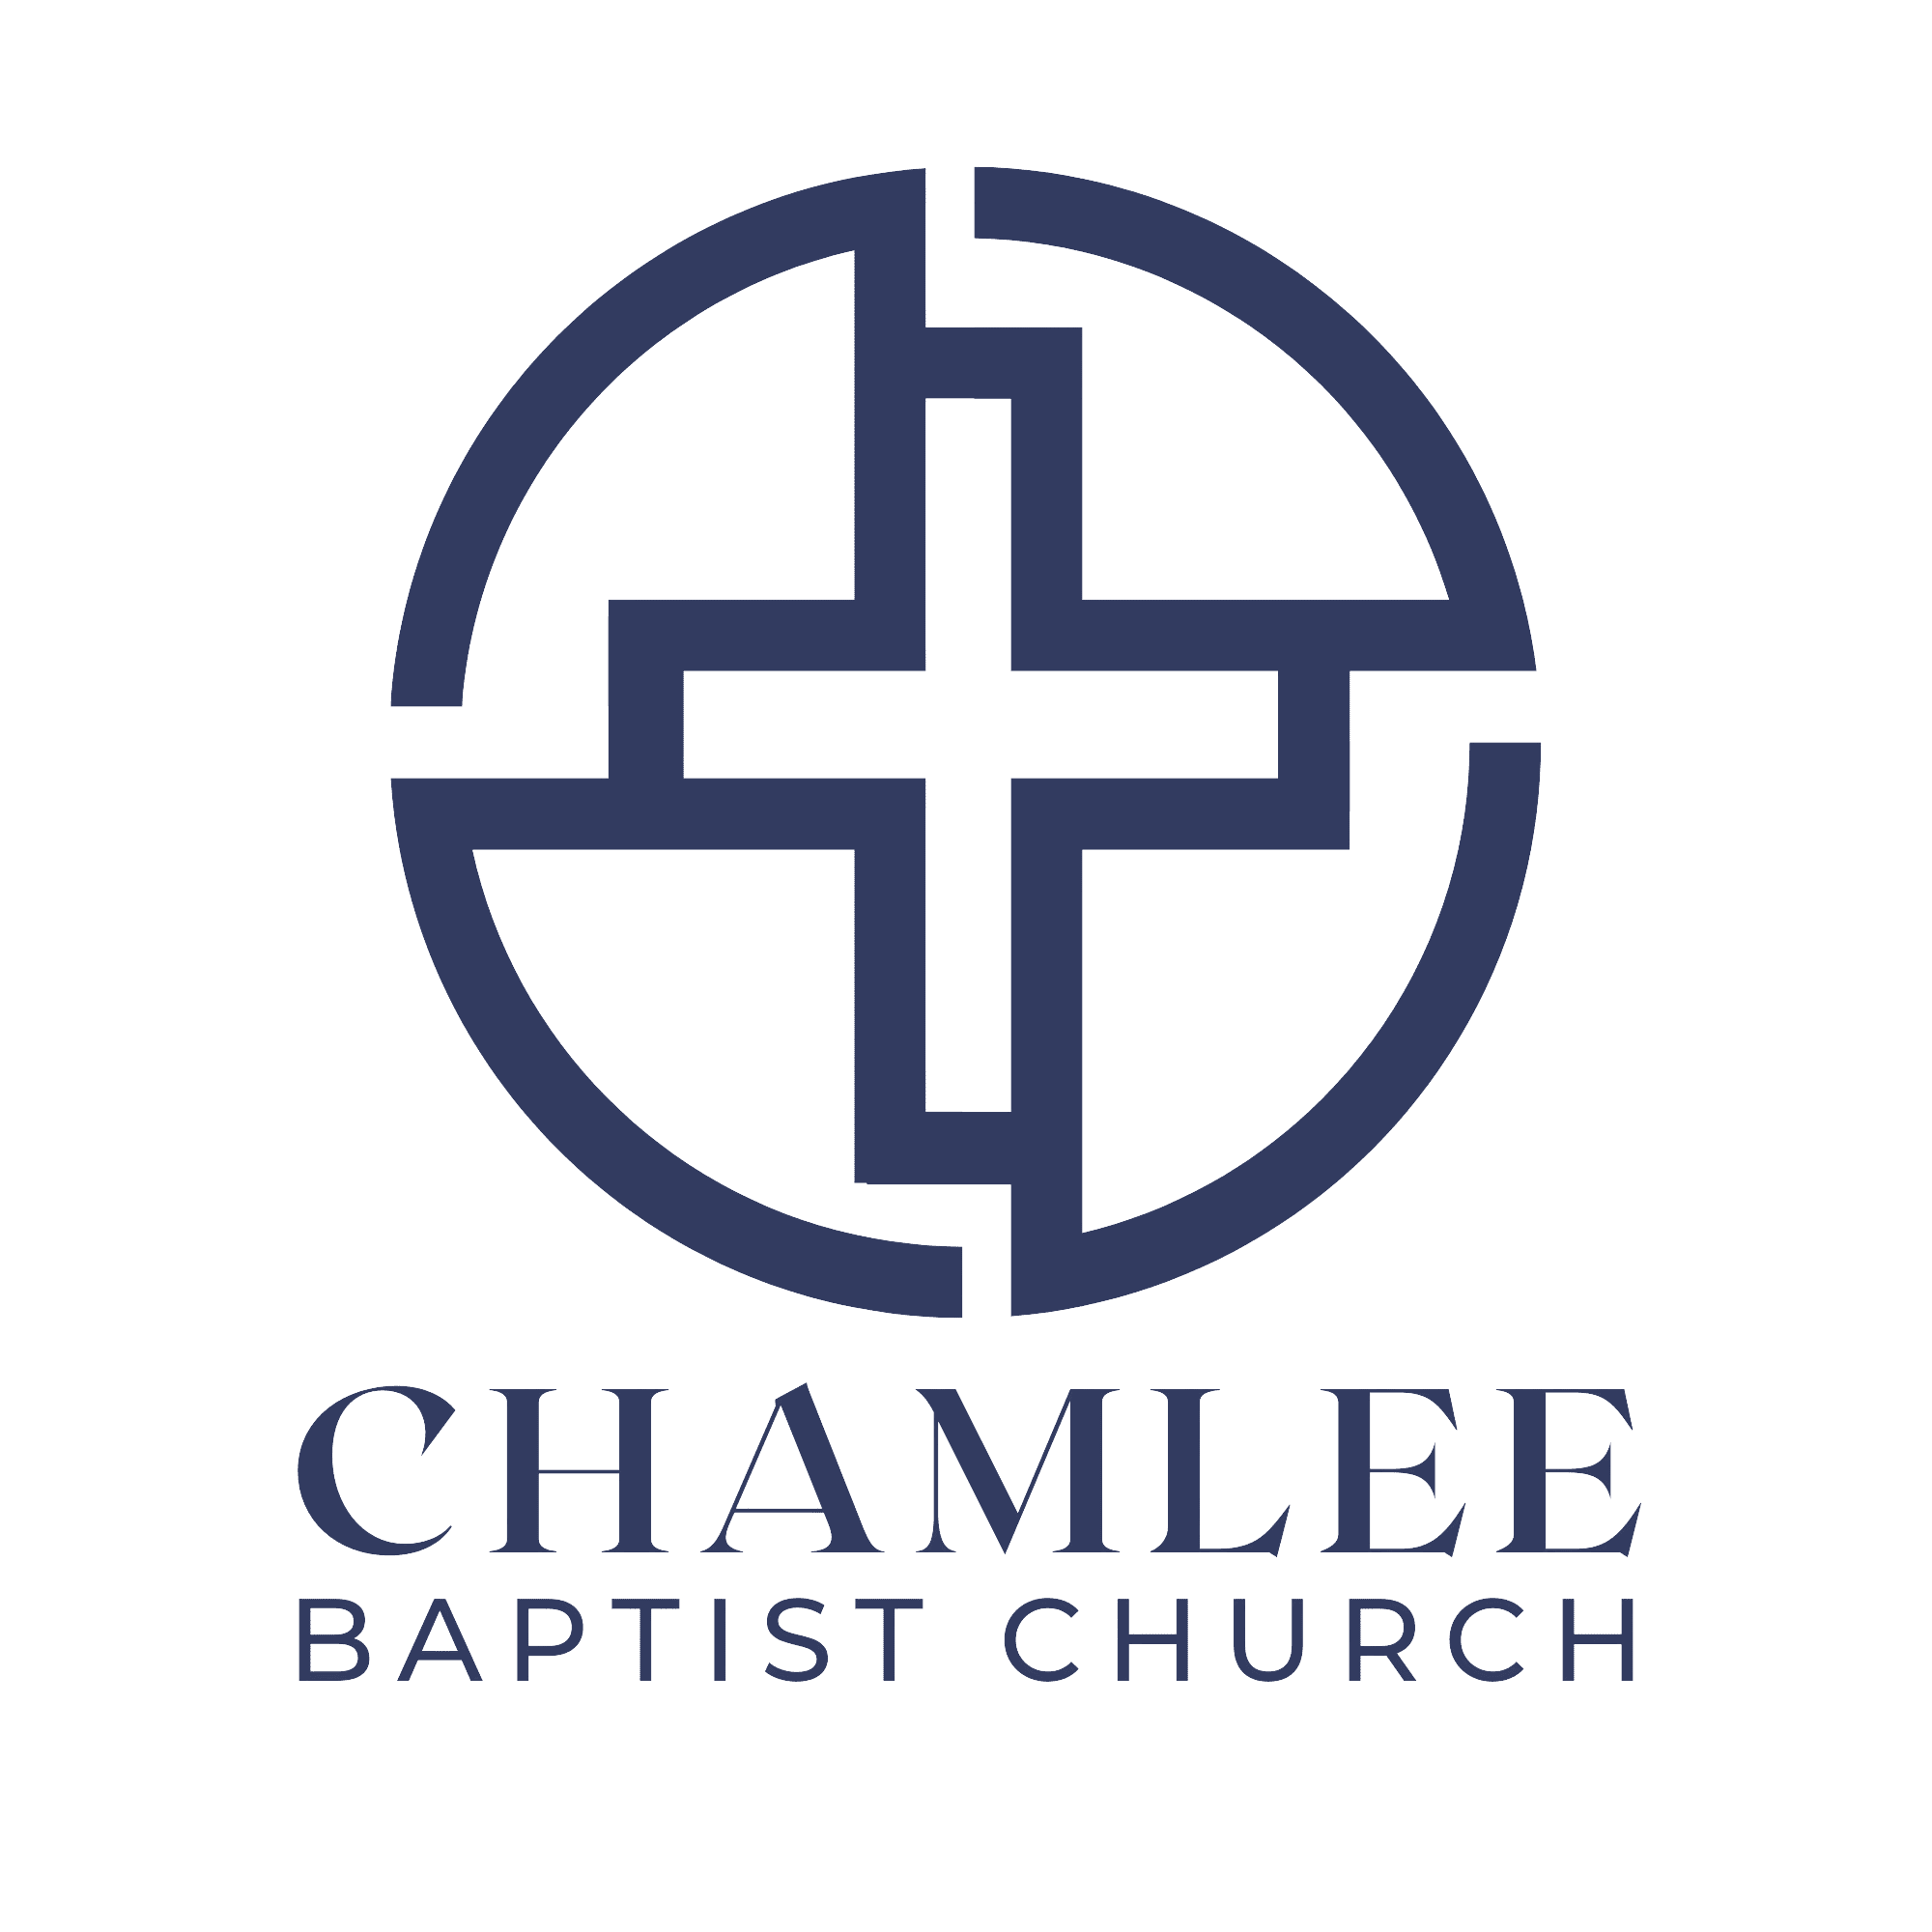 Chamlee Baptist Church